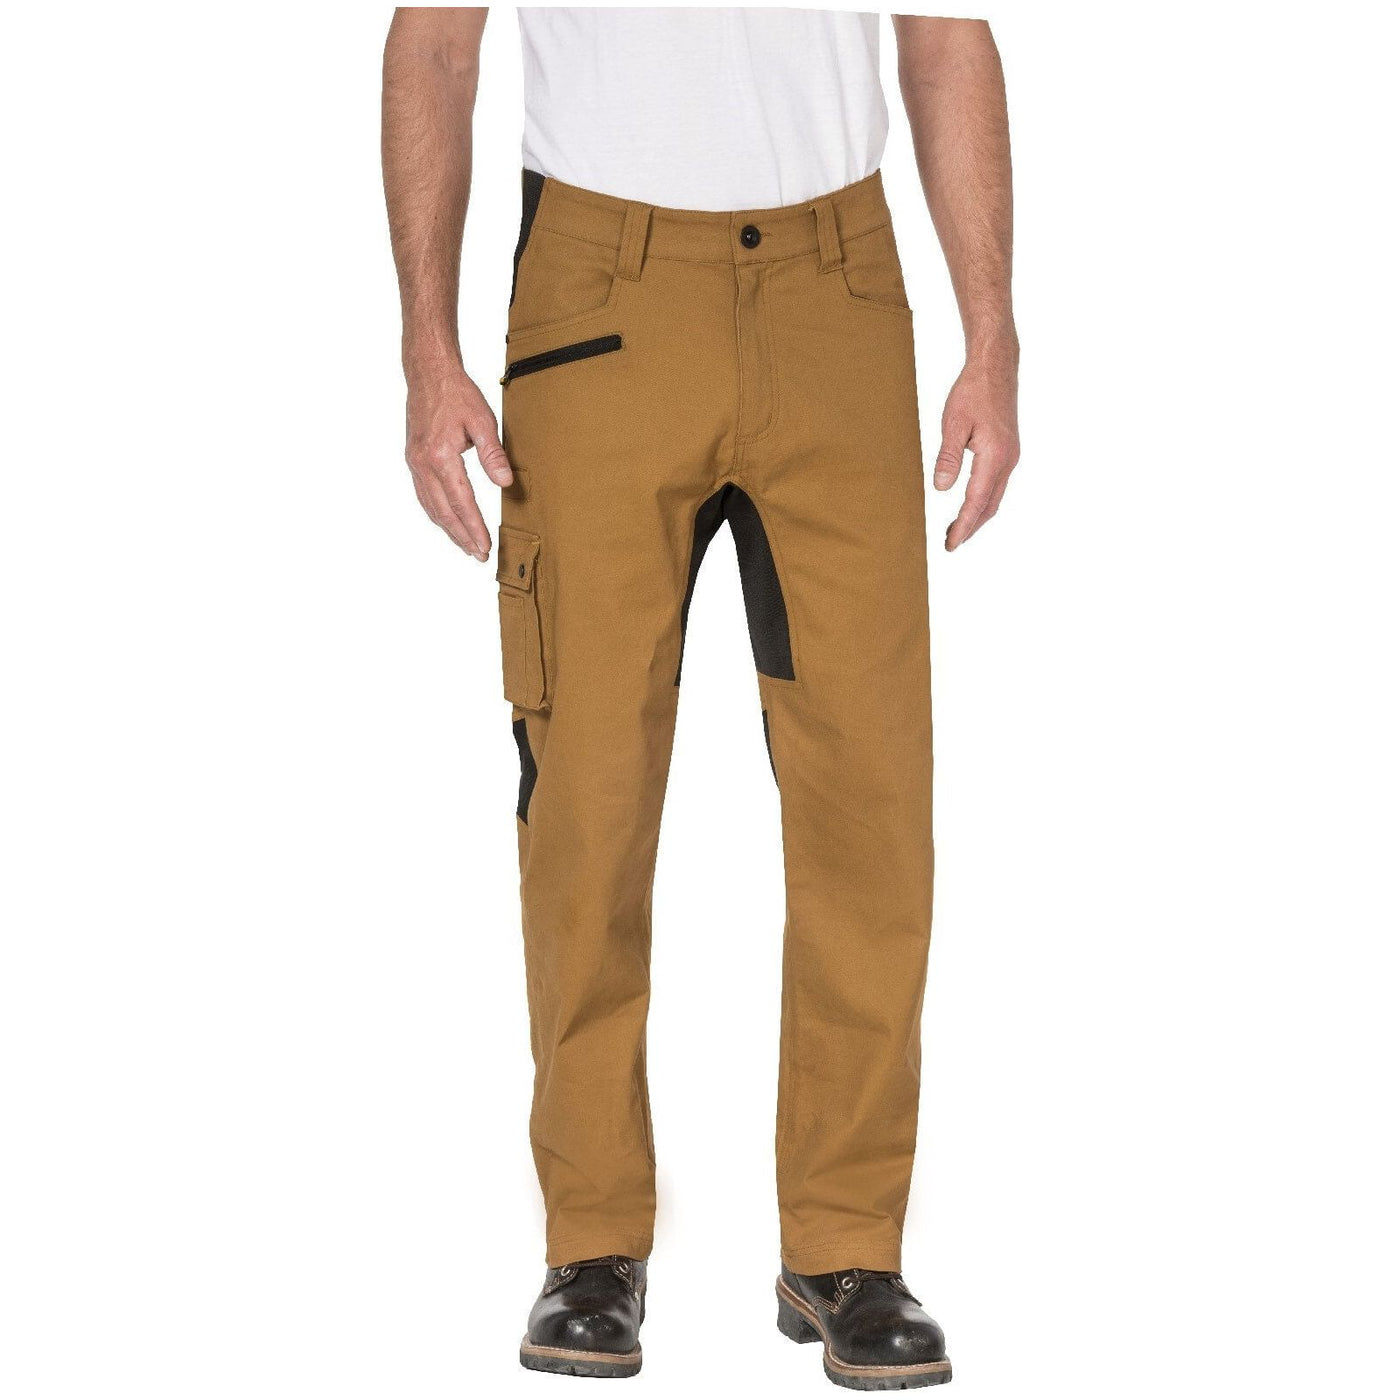 Caterpillar Cargo Trousers Mens Work Pants Essentials Knee Pocket Durable  CAT  eBay